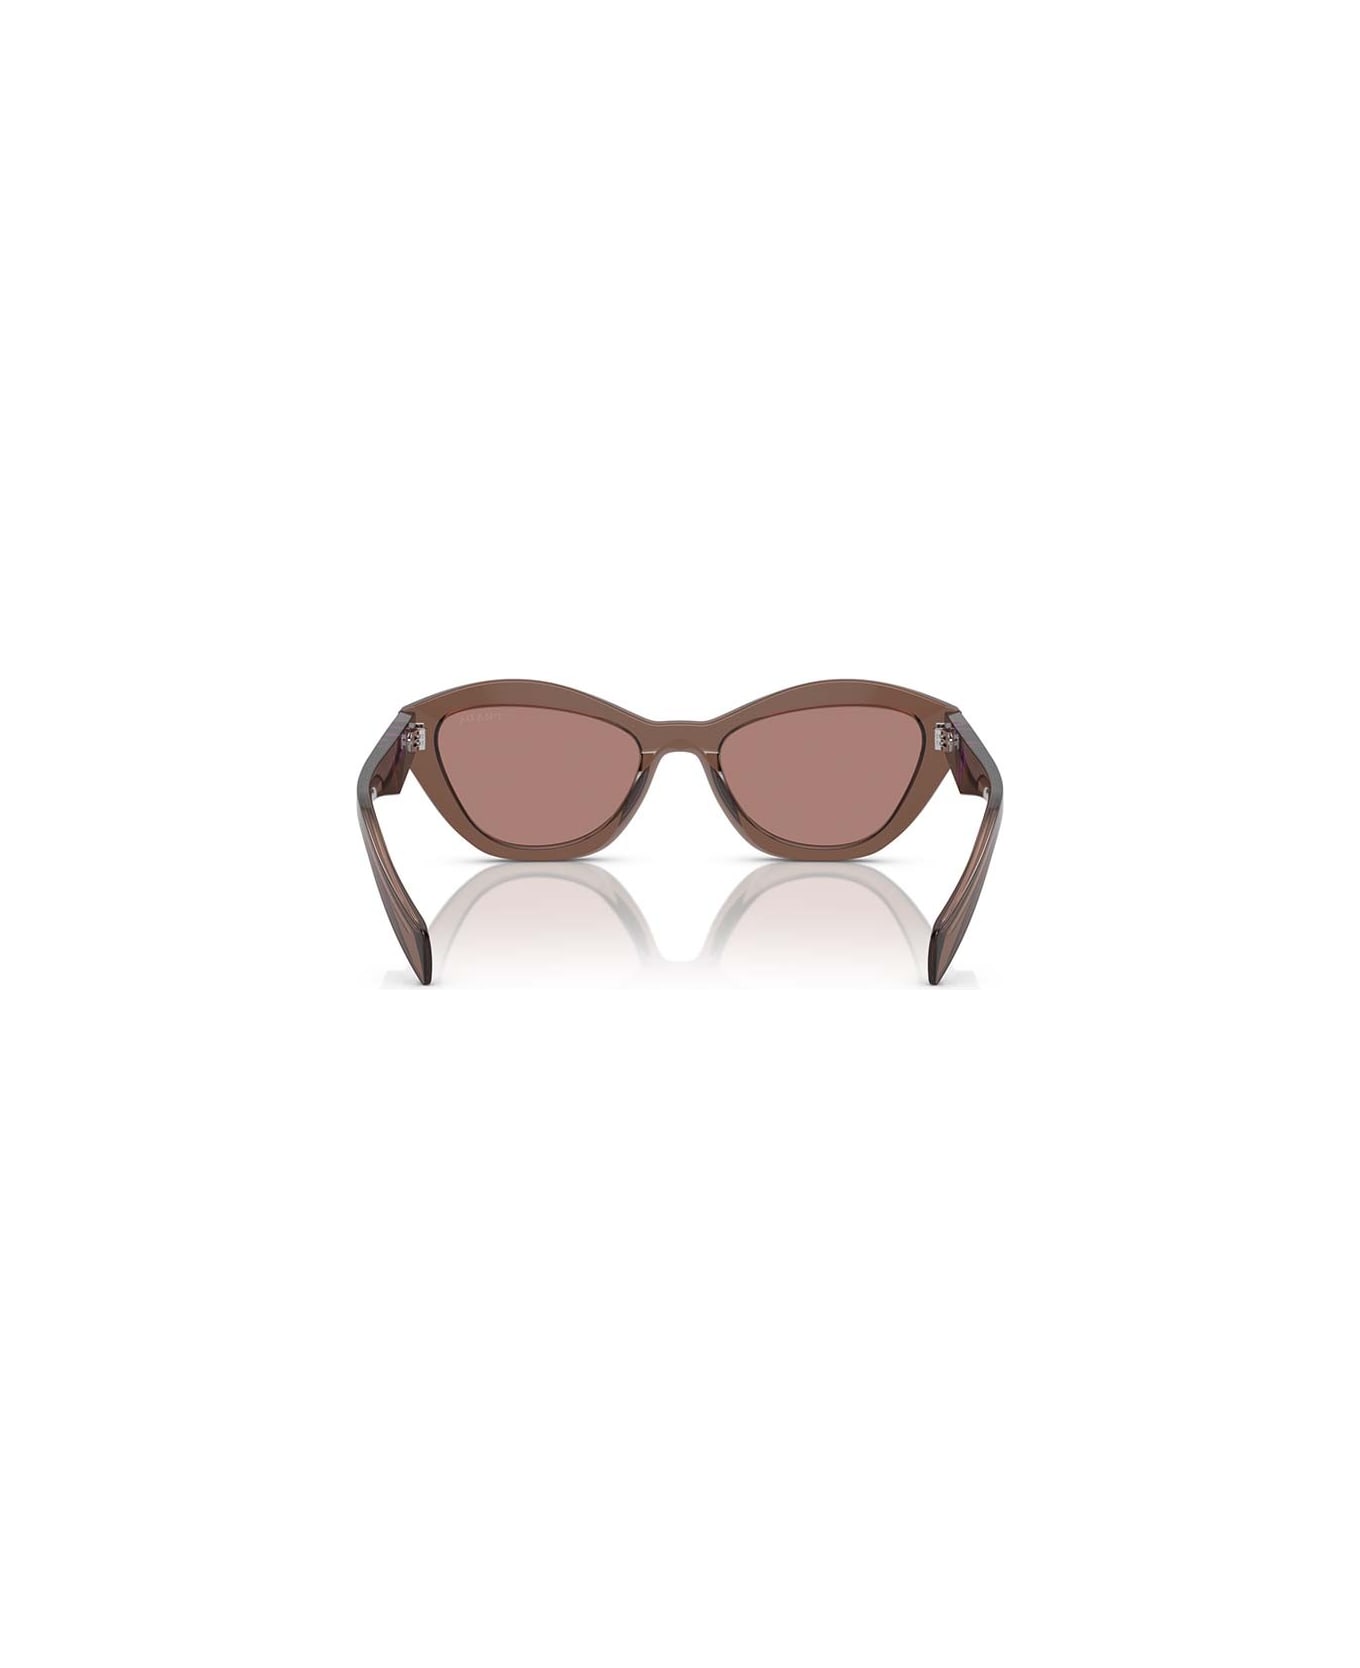 Prada Eyewear Eyewear - Marrone trasparente/Marrone chiaro